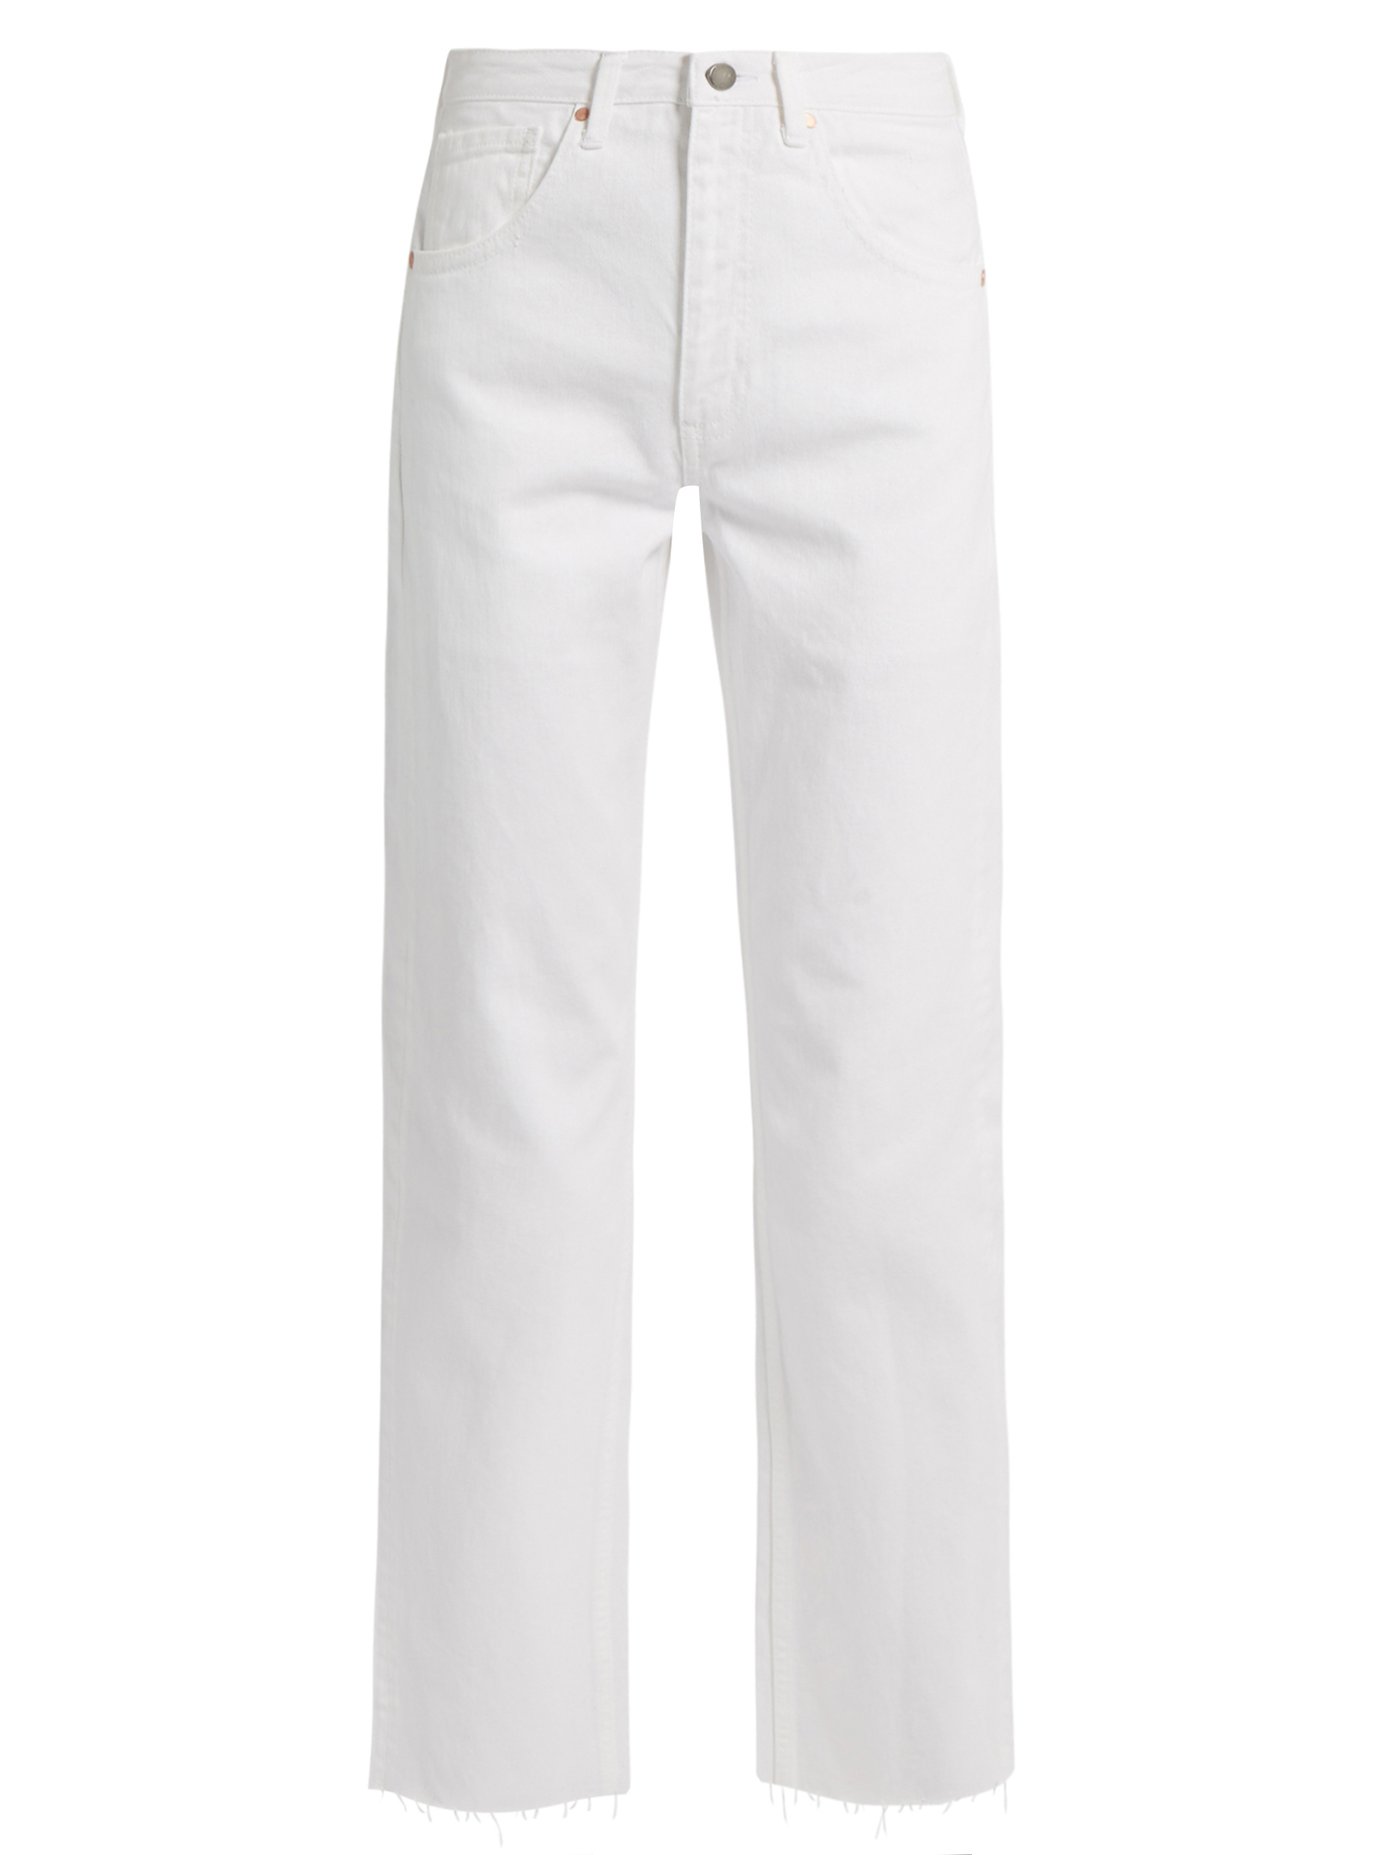 white denim straight leg jeans